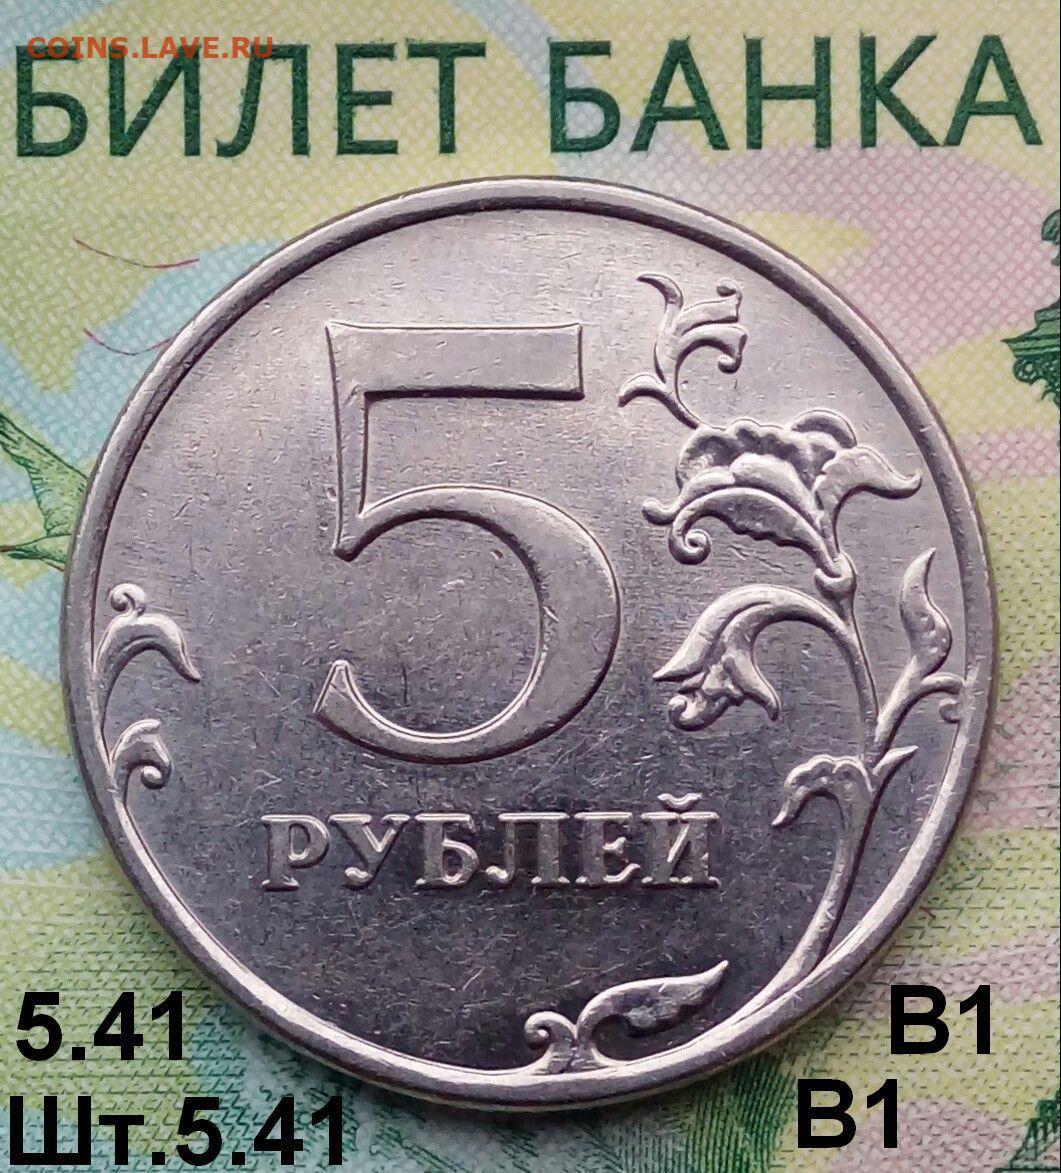 Рубль 5 32. 5 Рублей 2014 г. 5 Рублей 2019г шт а2. 5 Руб 2008 ММД шт 1.12. 2 Шт по 5 рублей.